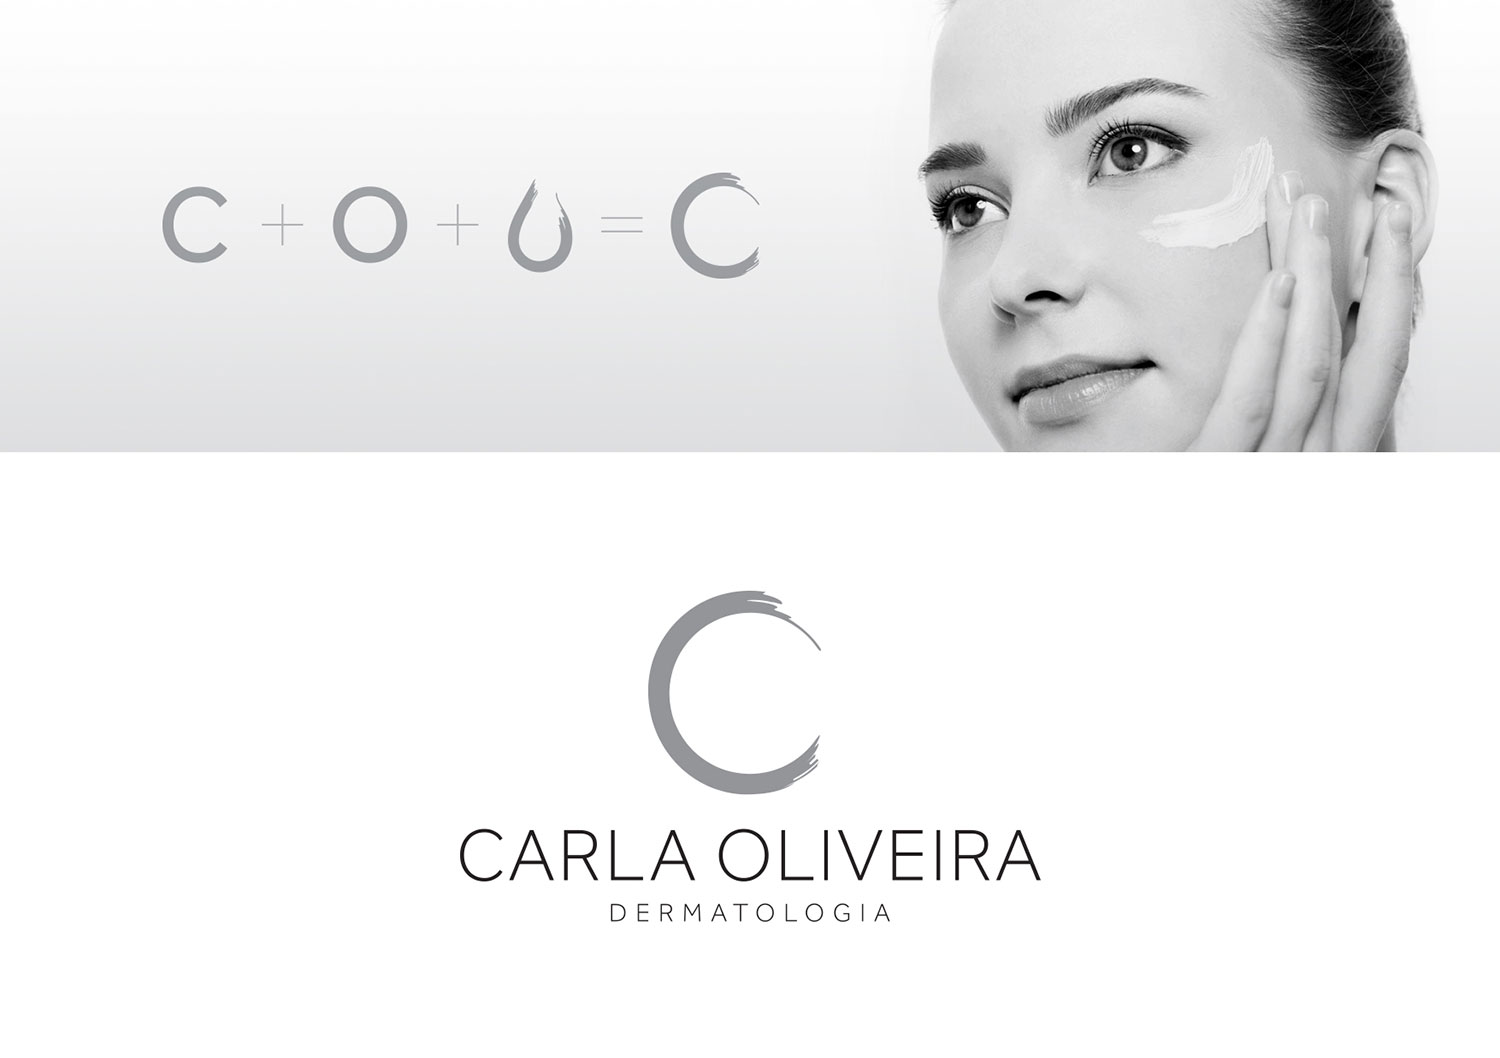 Carla Oliveira Dermatologia